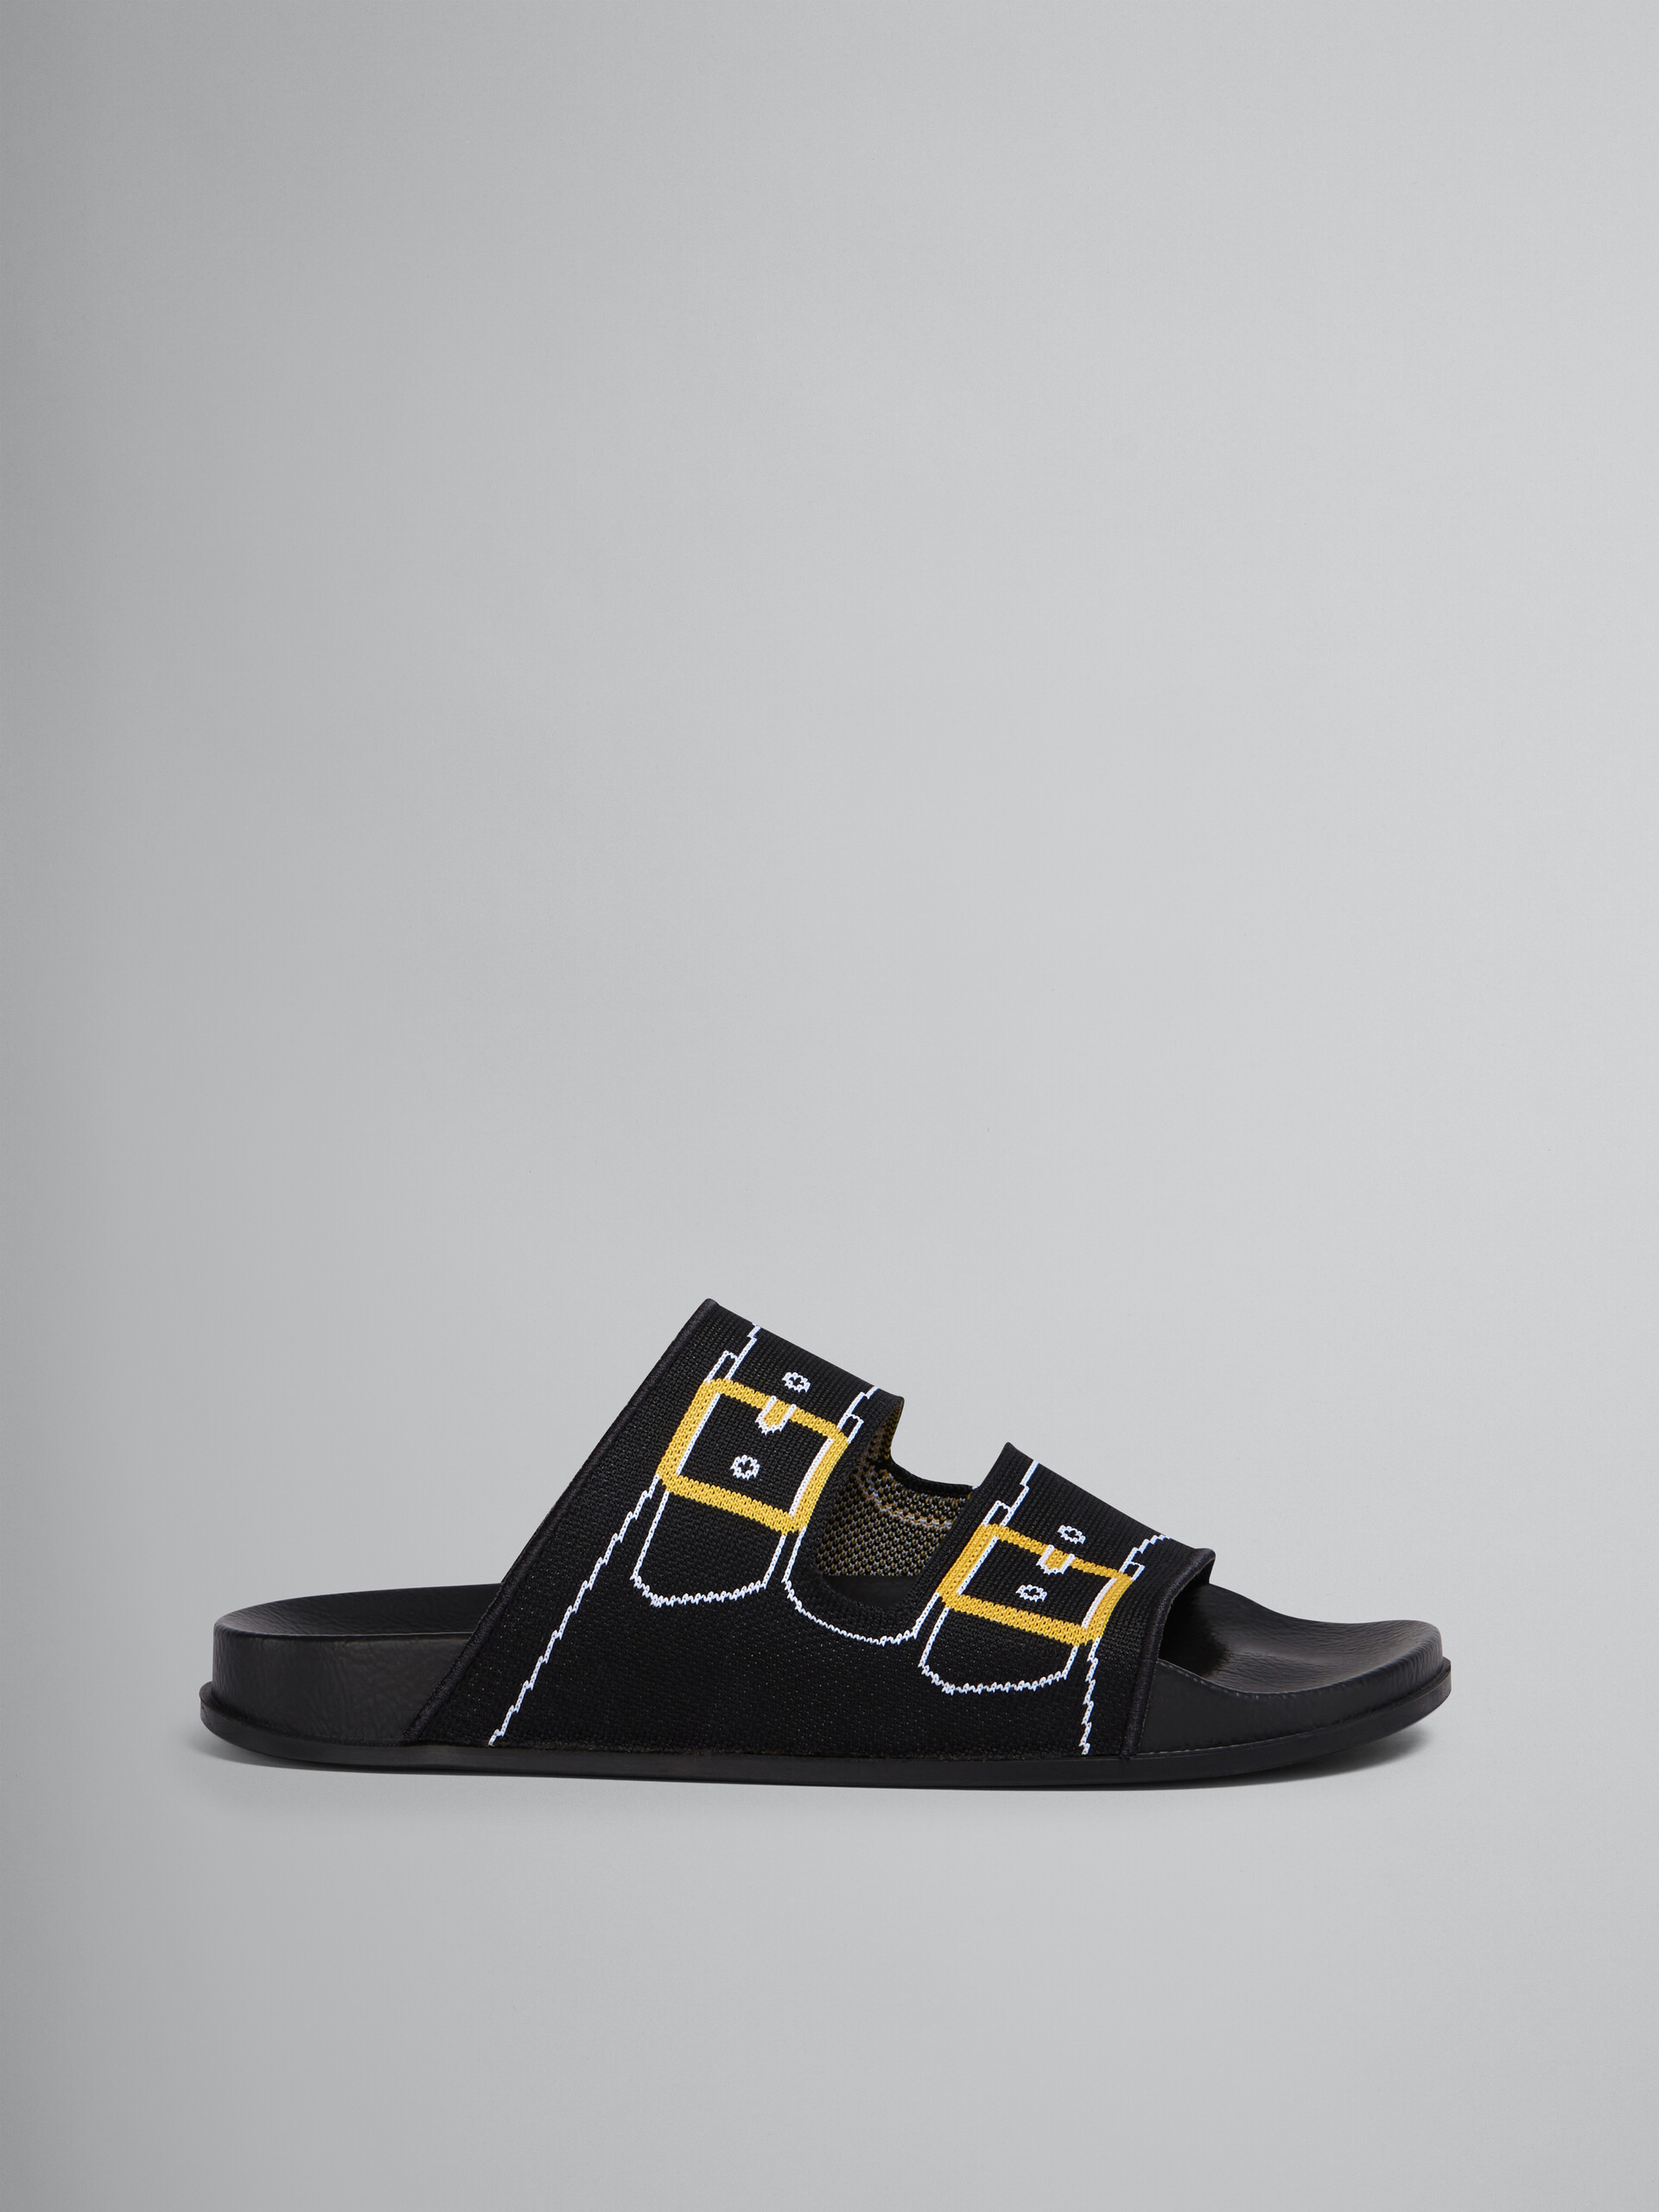 Black trompe l'œil jacquard two-strap slide - Sandals - Image 1